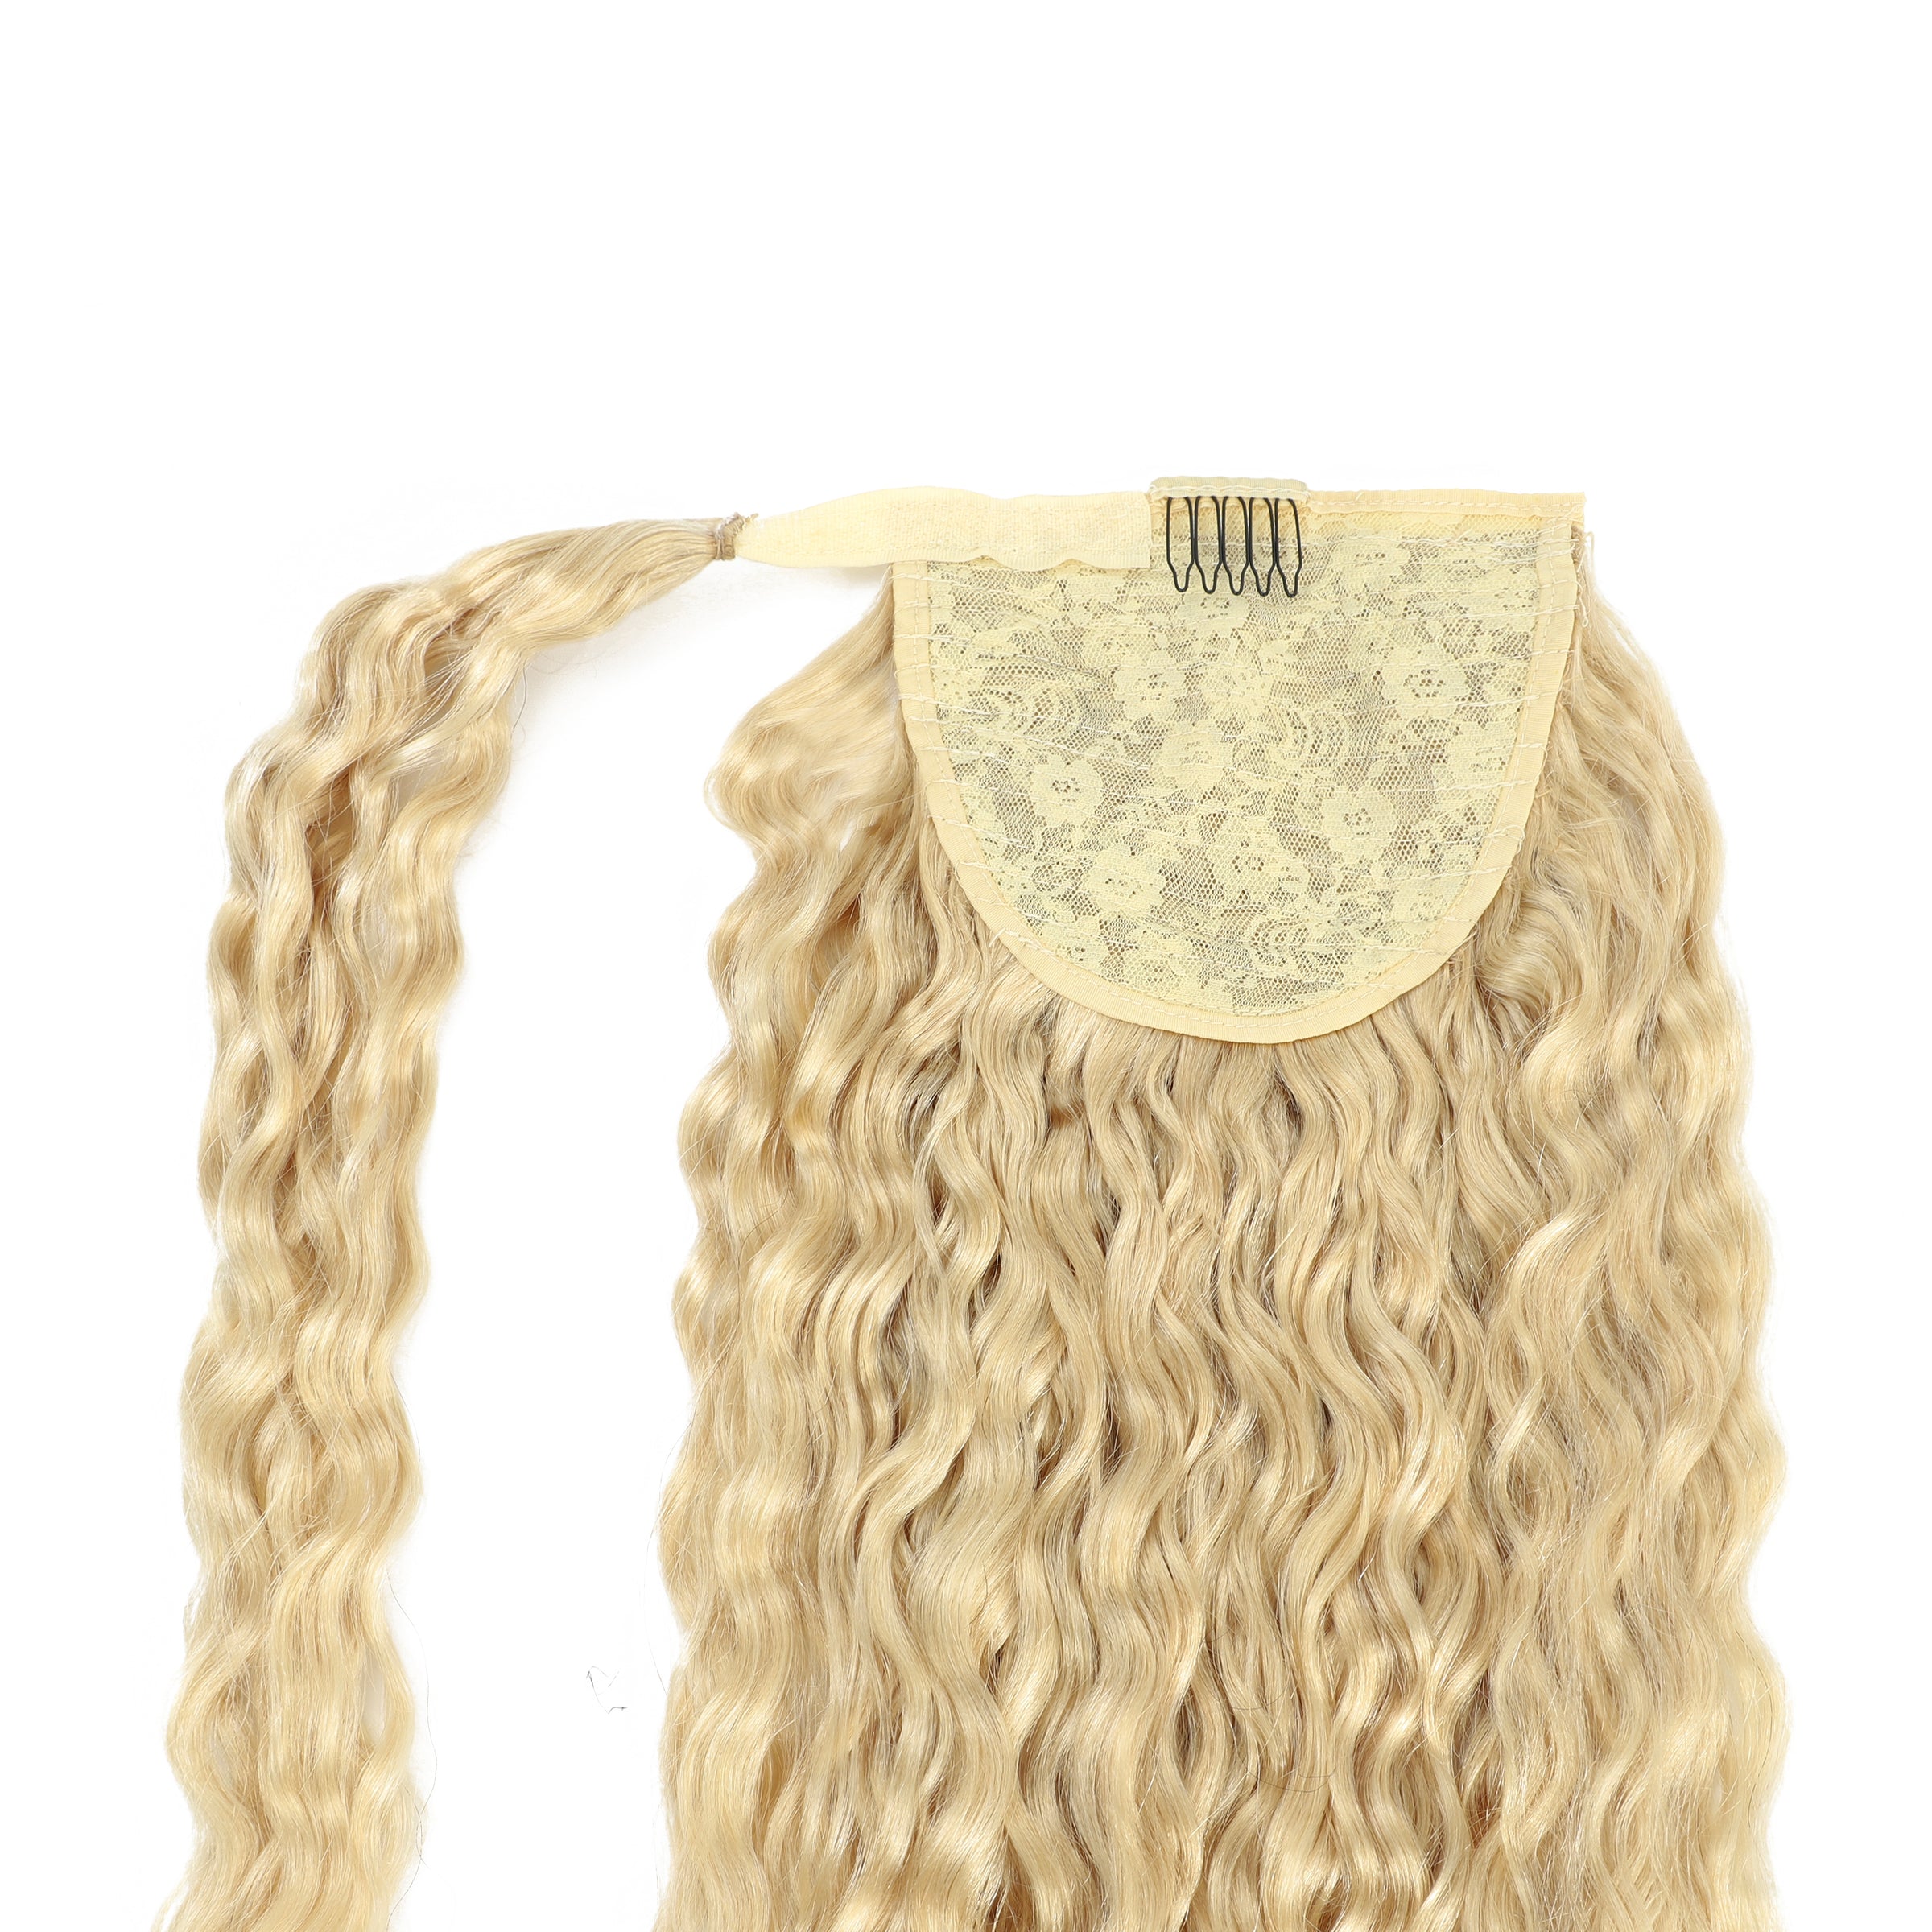 Curly Ponytail Human Hair Extensions #60 Platinum Blonde